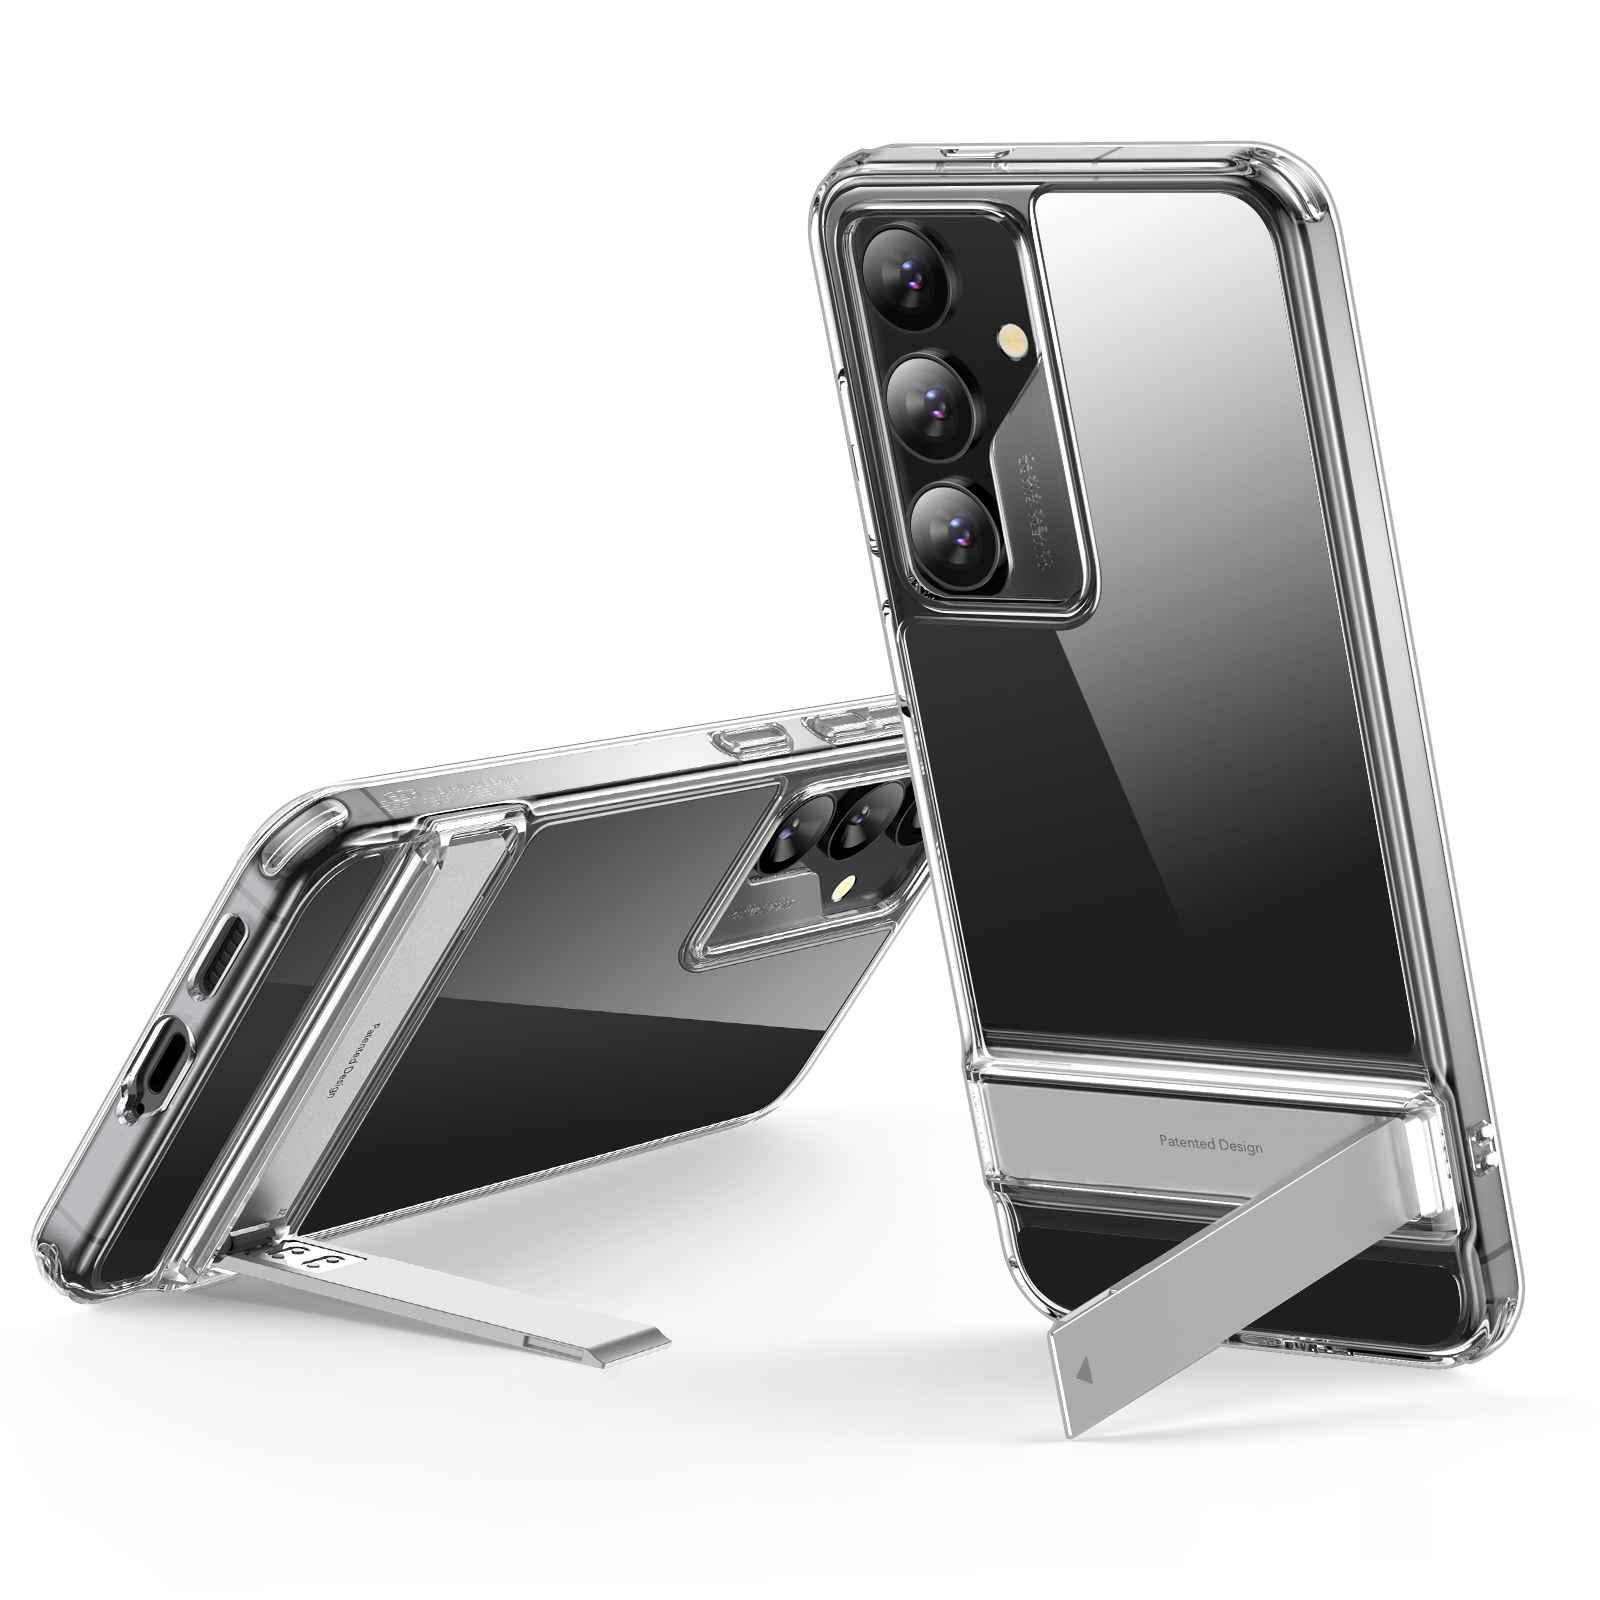 ESR Black Armor 360° Case with Kickstand - For Samsung Galaxy S24 Ultra